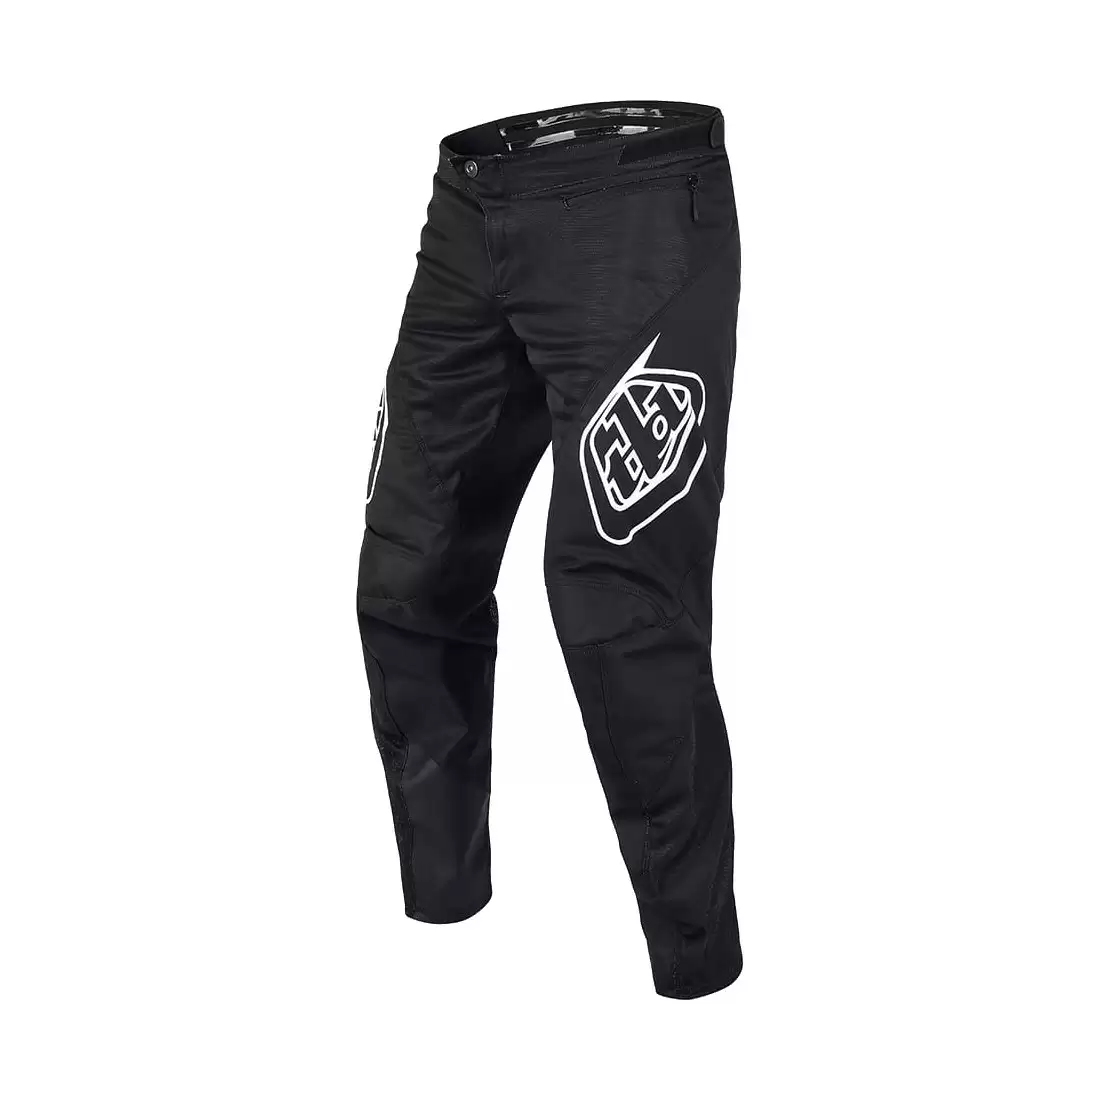 DH/Enduro Sprint MTB Long Pants Black Size XXXL - image